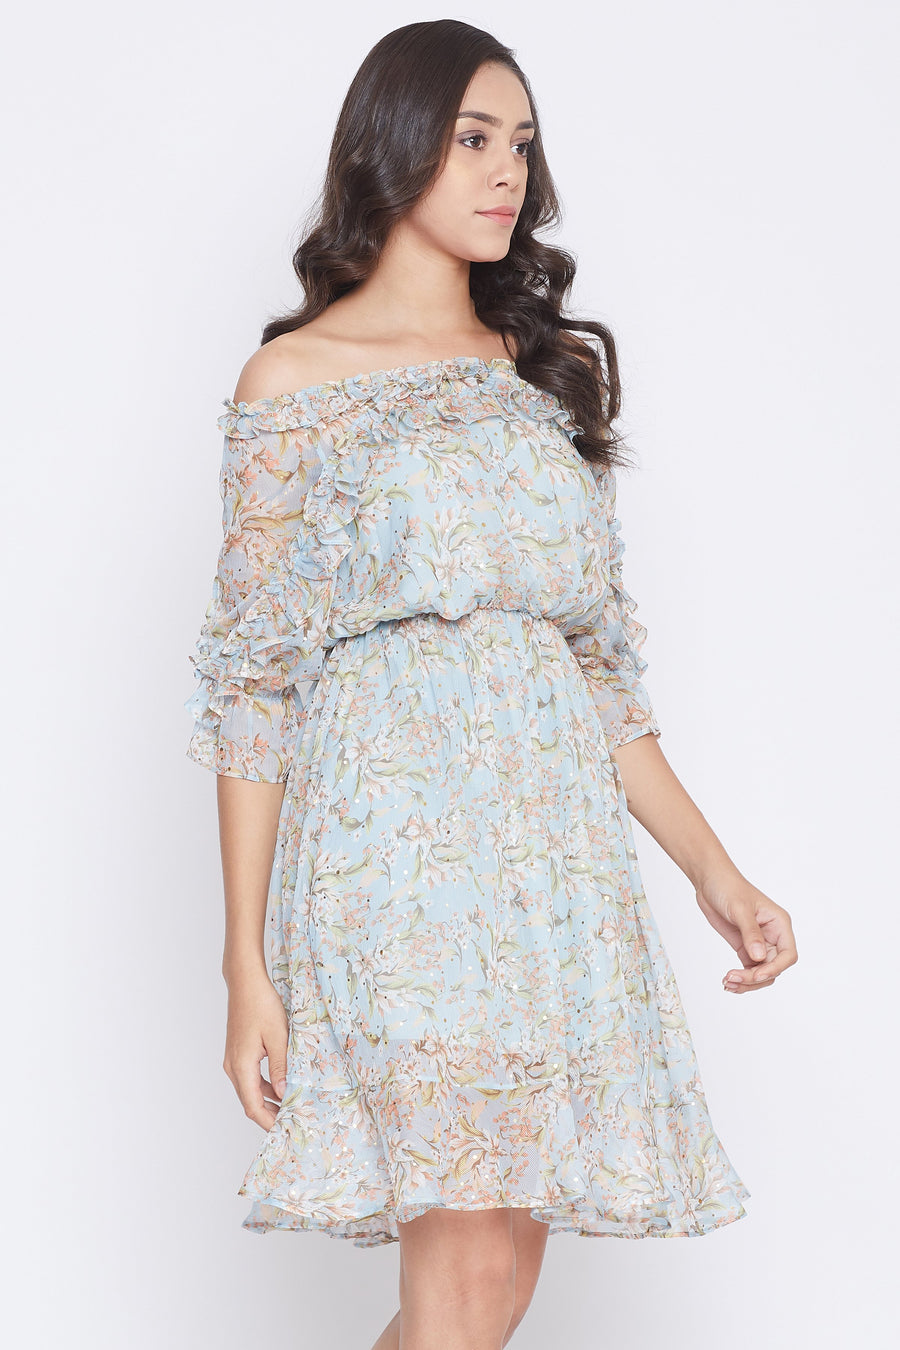 Madame Blue Color Dress For Women | Buy ...